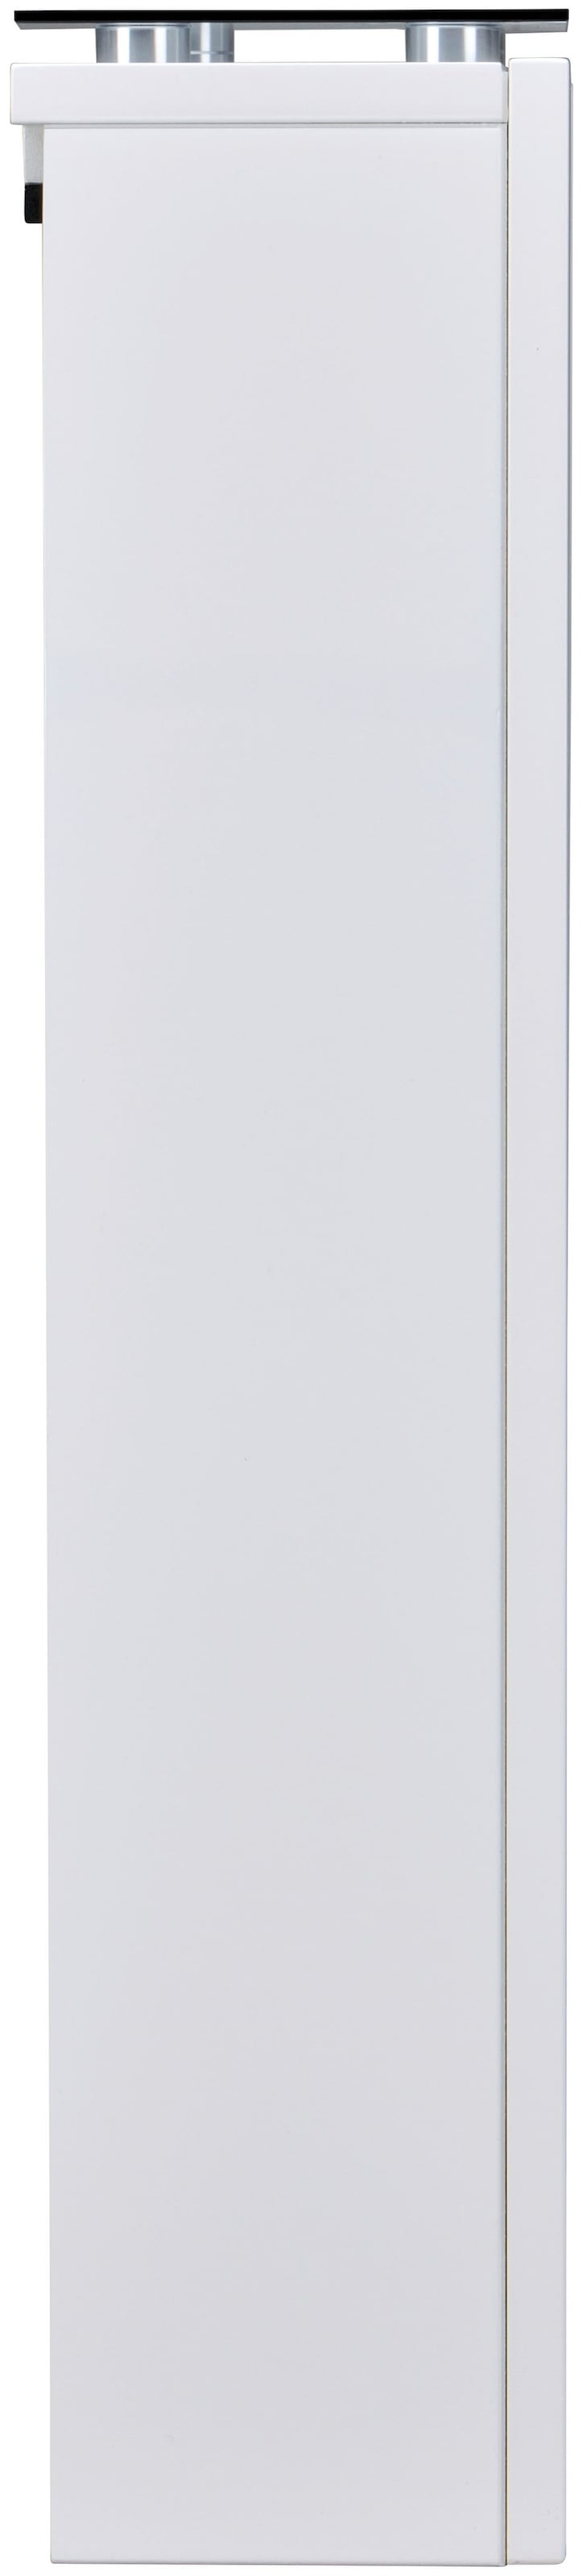 Dimplex Elektrokamin »Gisella white«, 2 Heizstufen 750/1500 W, inkl. Fernbedienung; Optiflame® Flammeneffekt